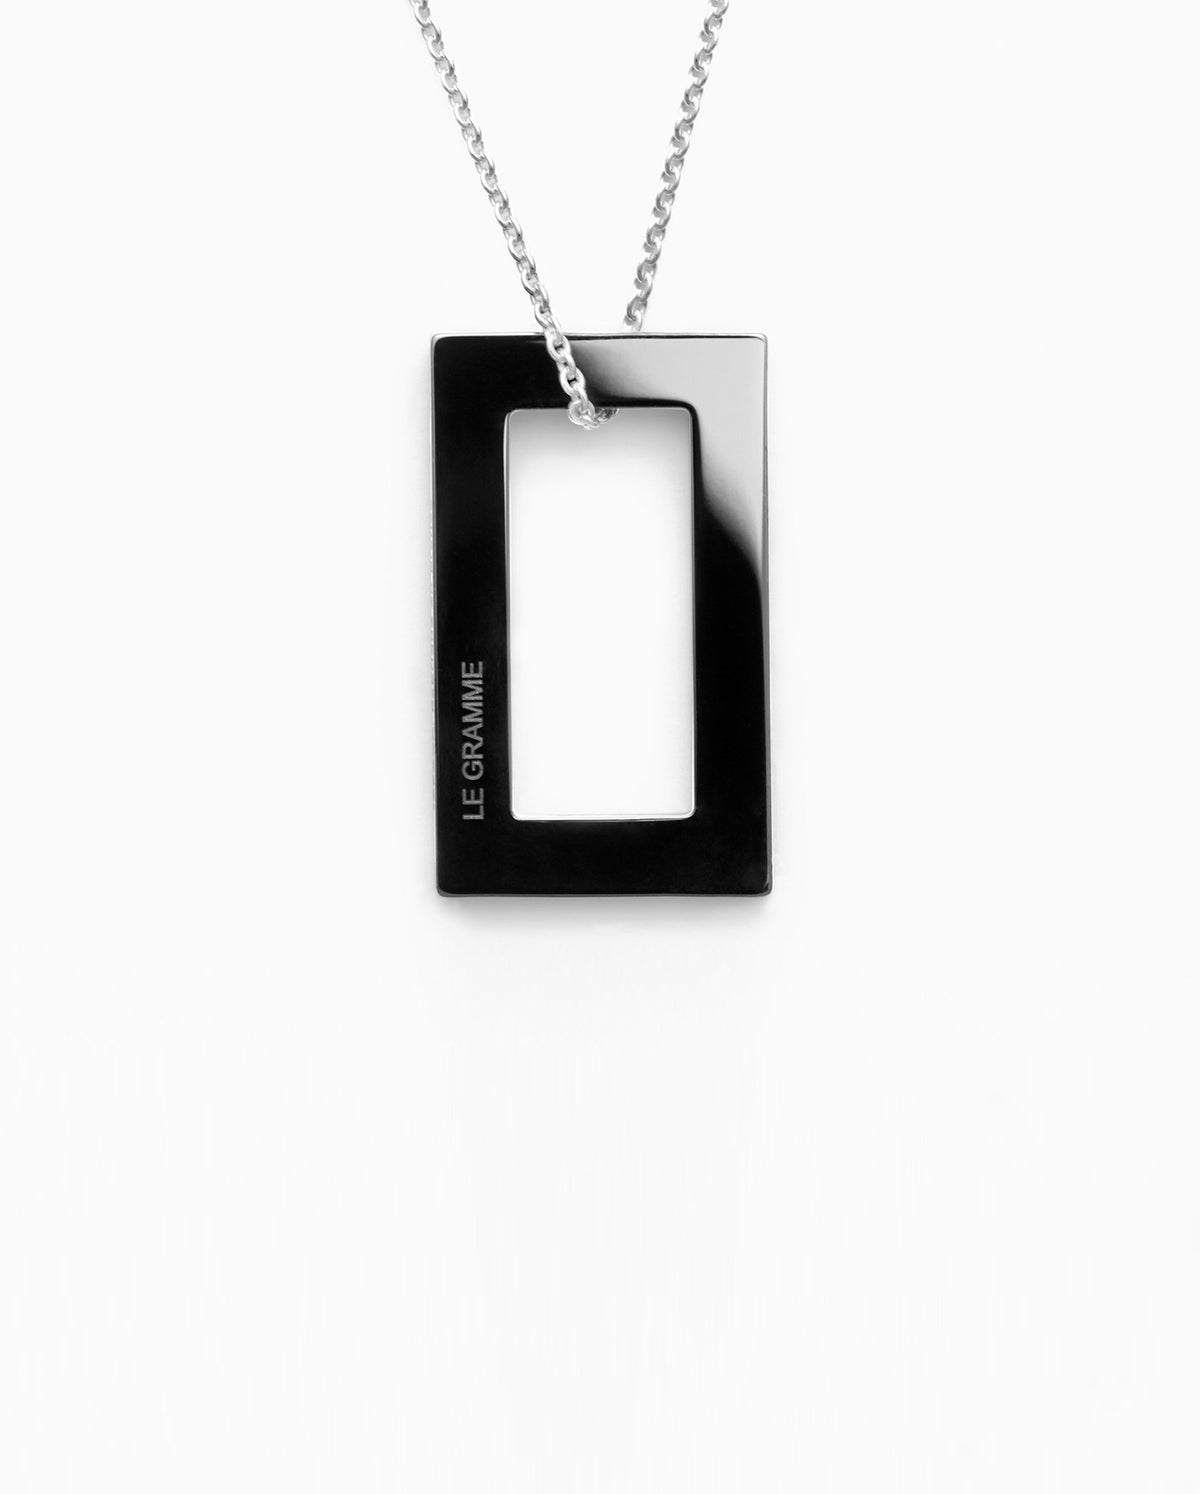 2.1G Ceramic Necklace - Black